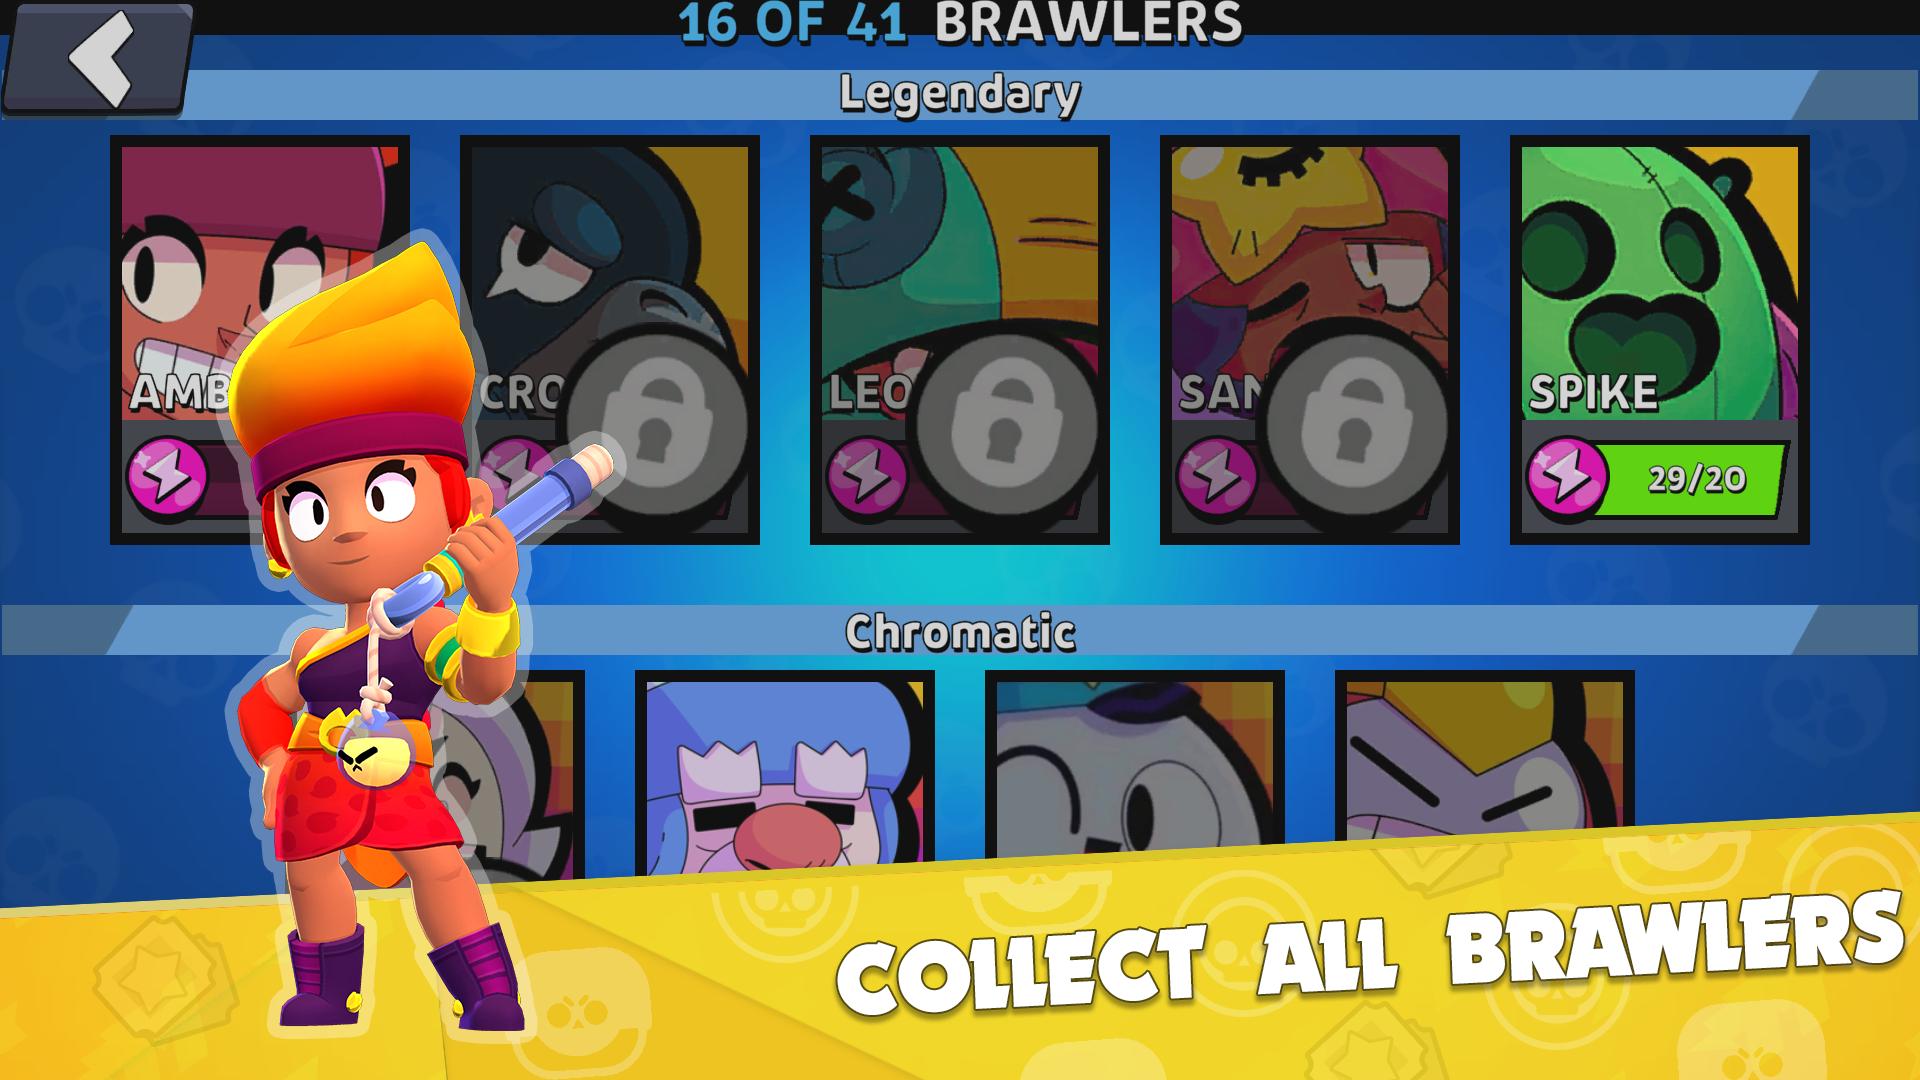 Box Simulator For Brawl Stars For Android Apk Download - brawlers legendary brawl stars wallpaper